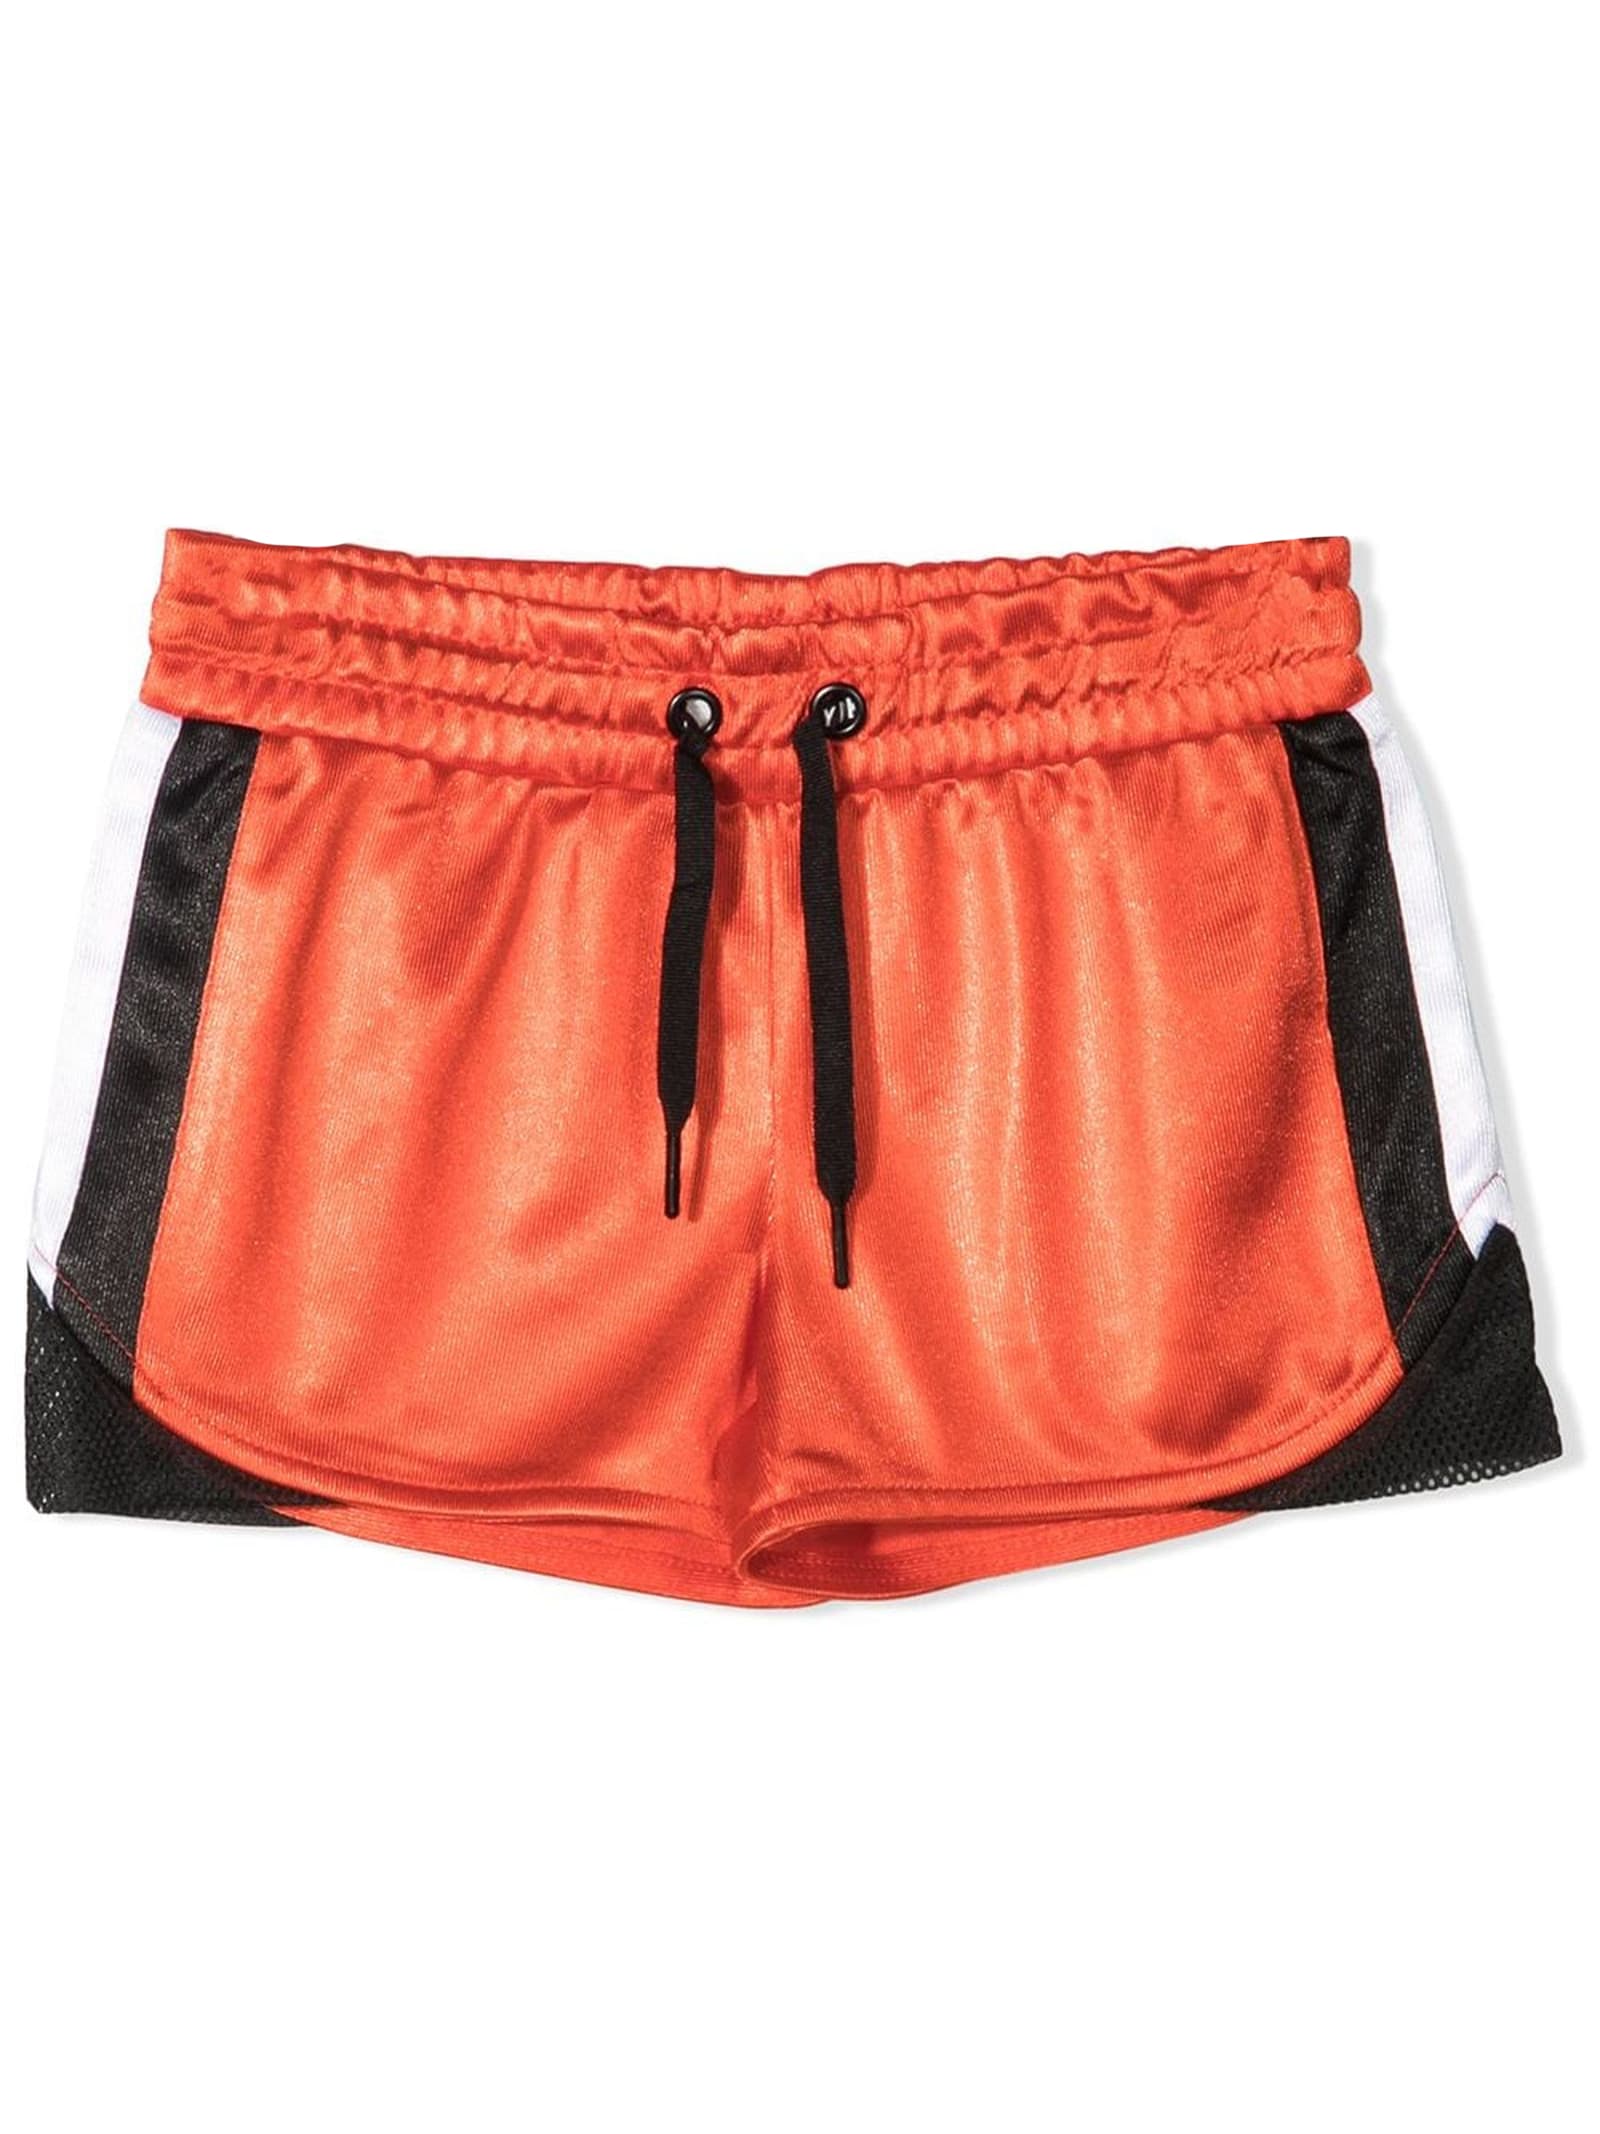 DKNY Orange Shorts